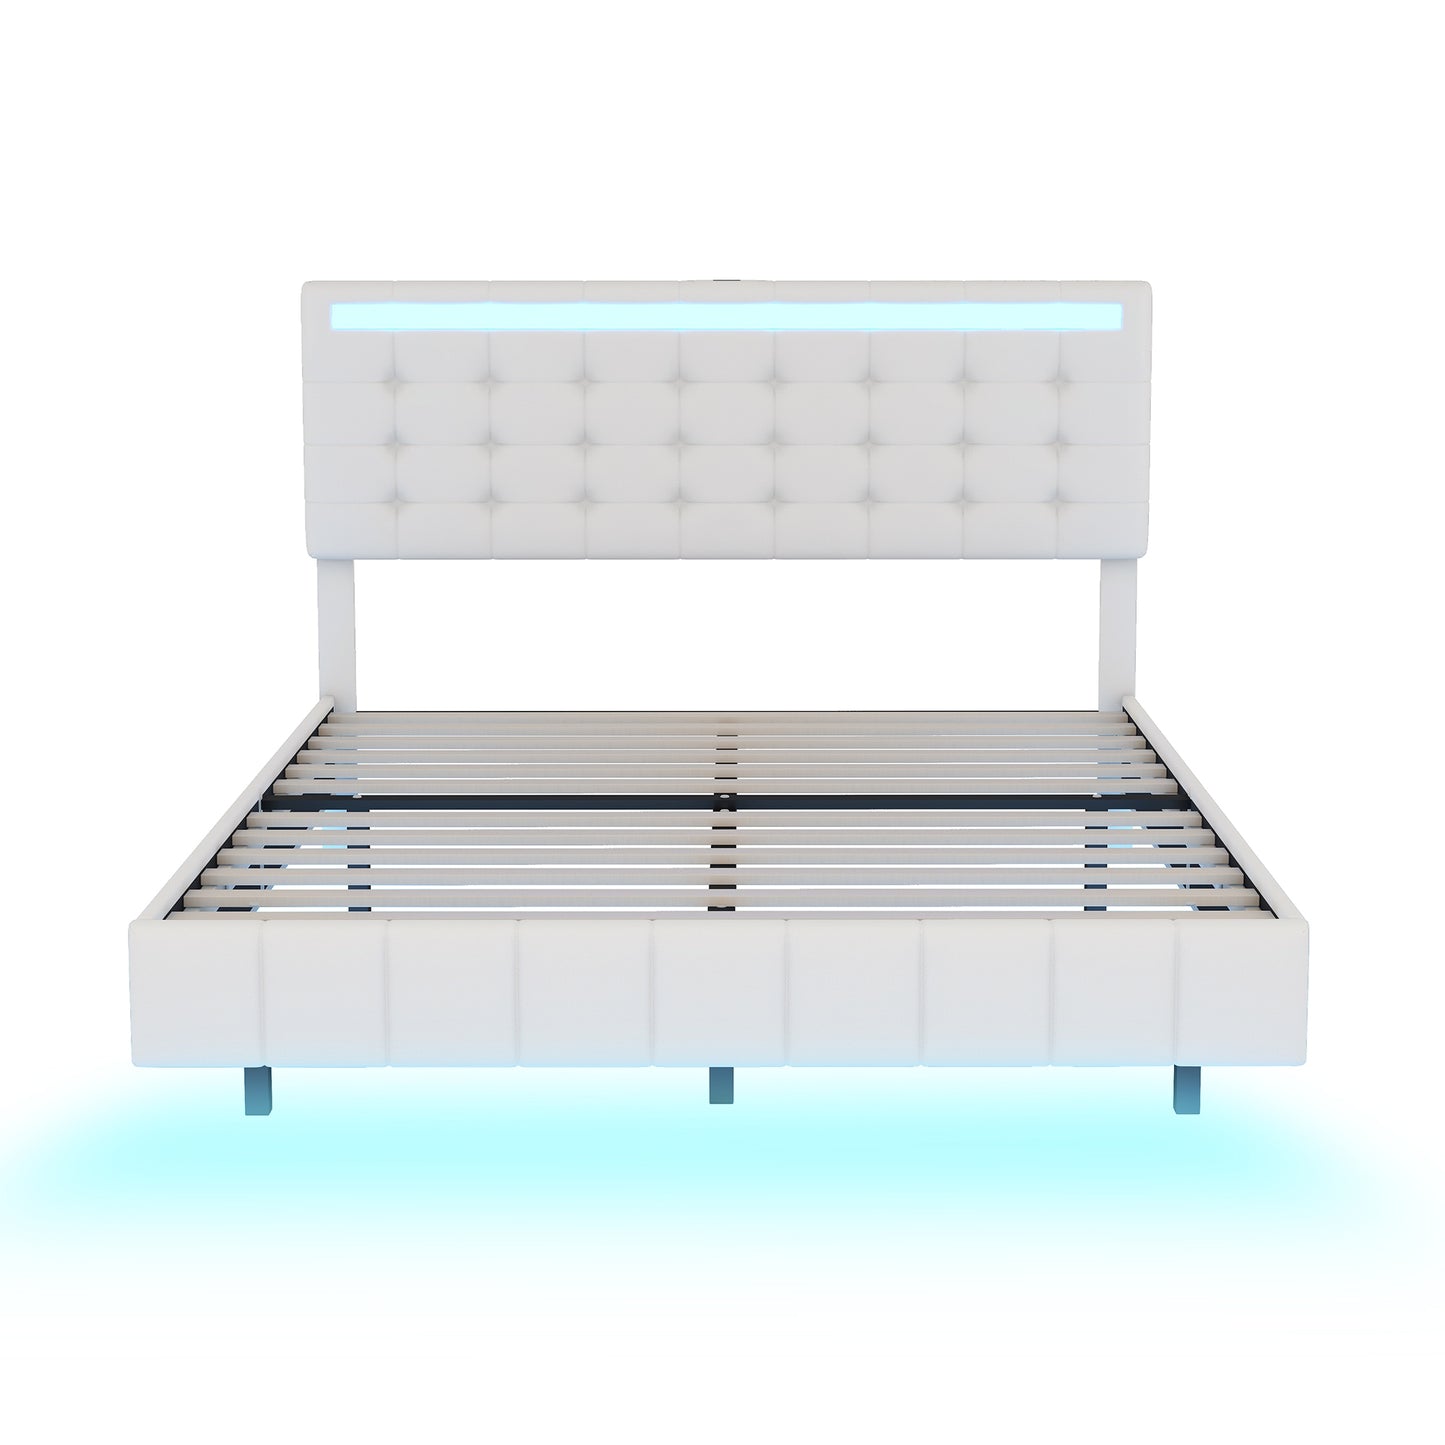 Queen Size Floating Bed Frame with LED Lights and USB Charging,Modern Upholstered Platform LED Bed Frame,White